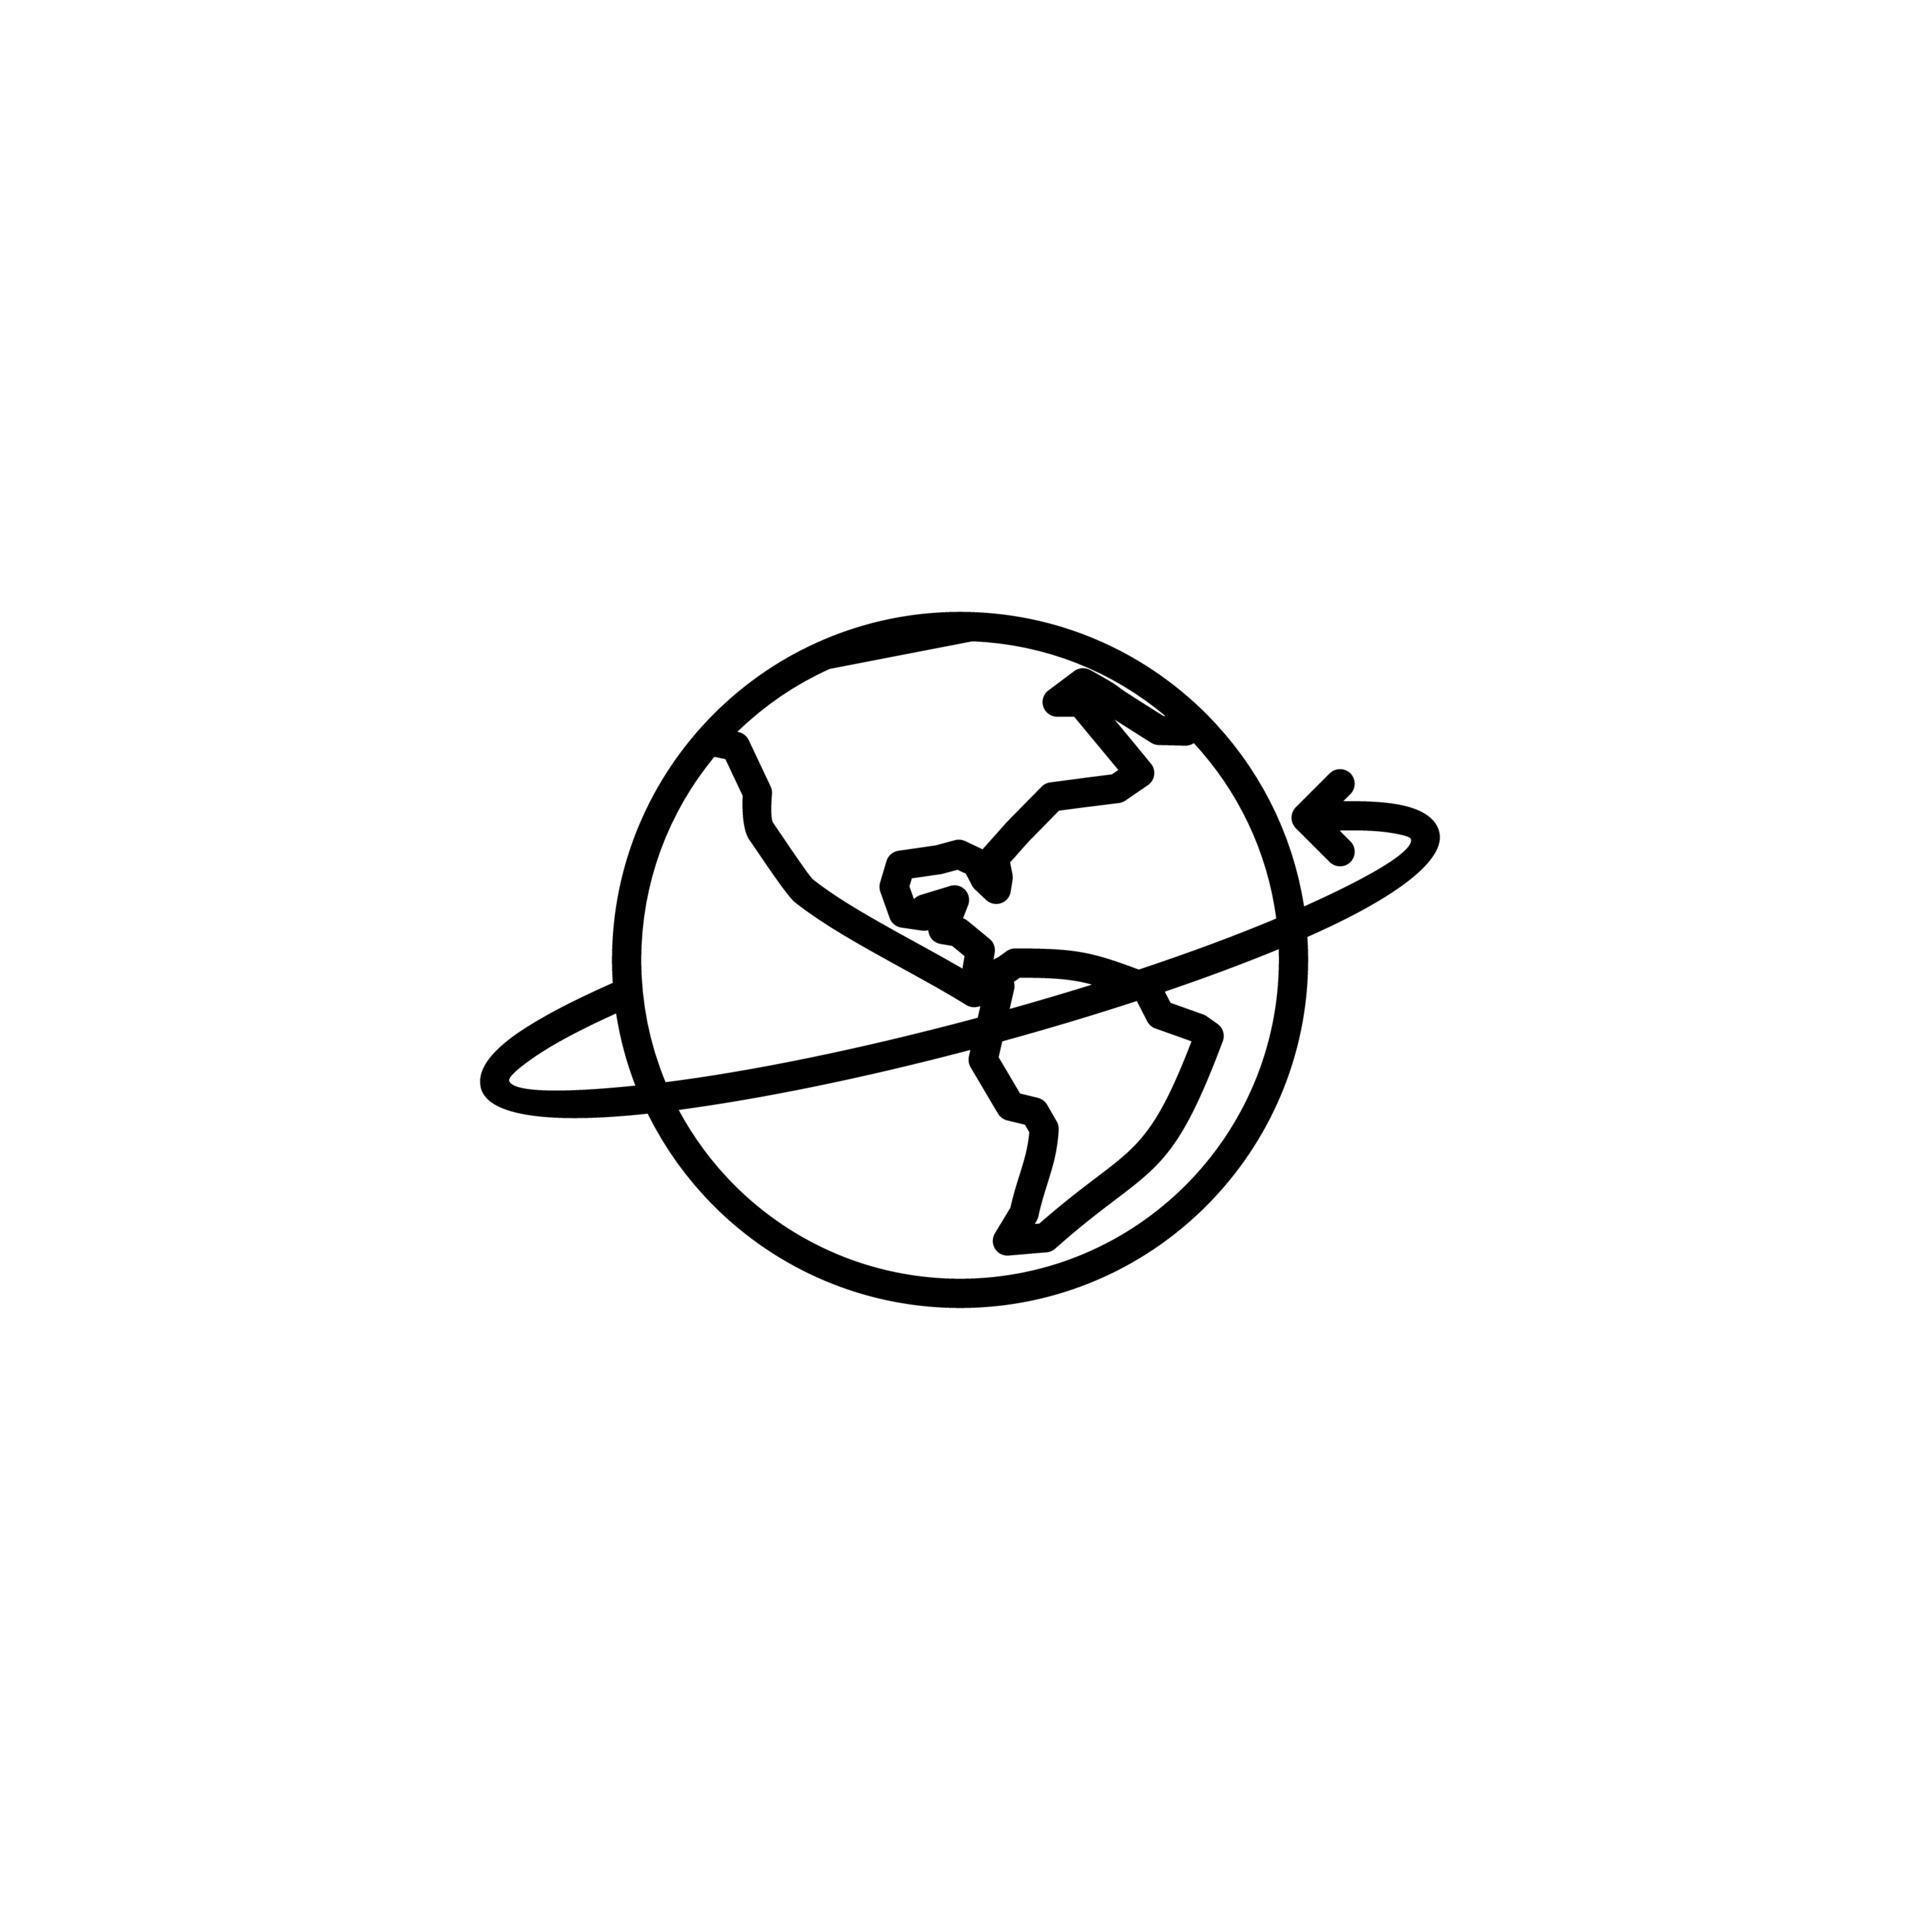 World, Earth, Global Line Icon, Vector, Illustration, Logo Template ...